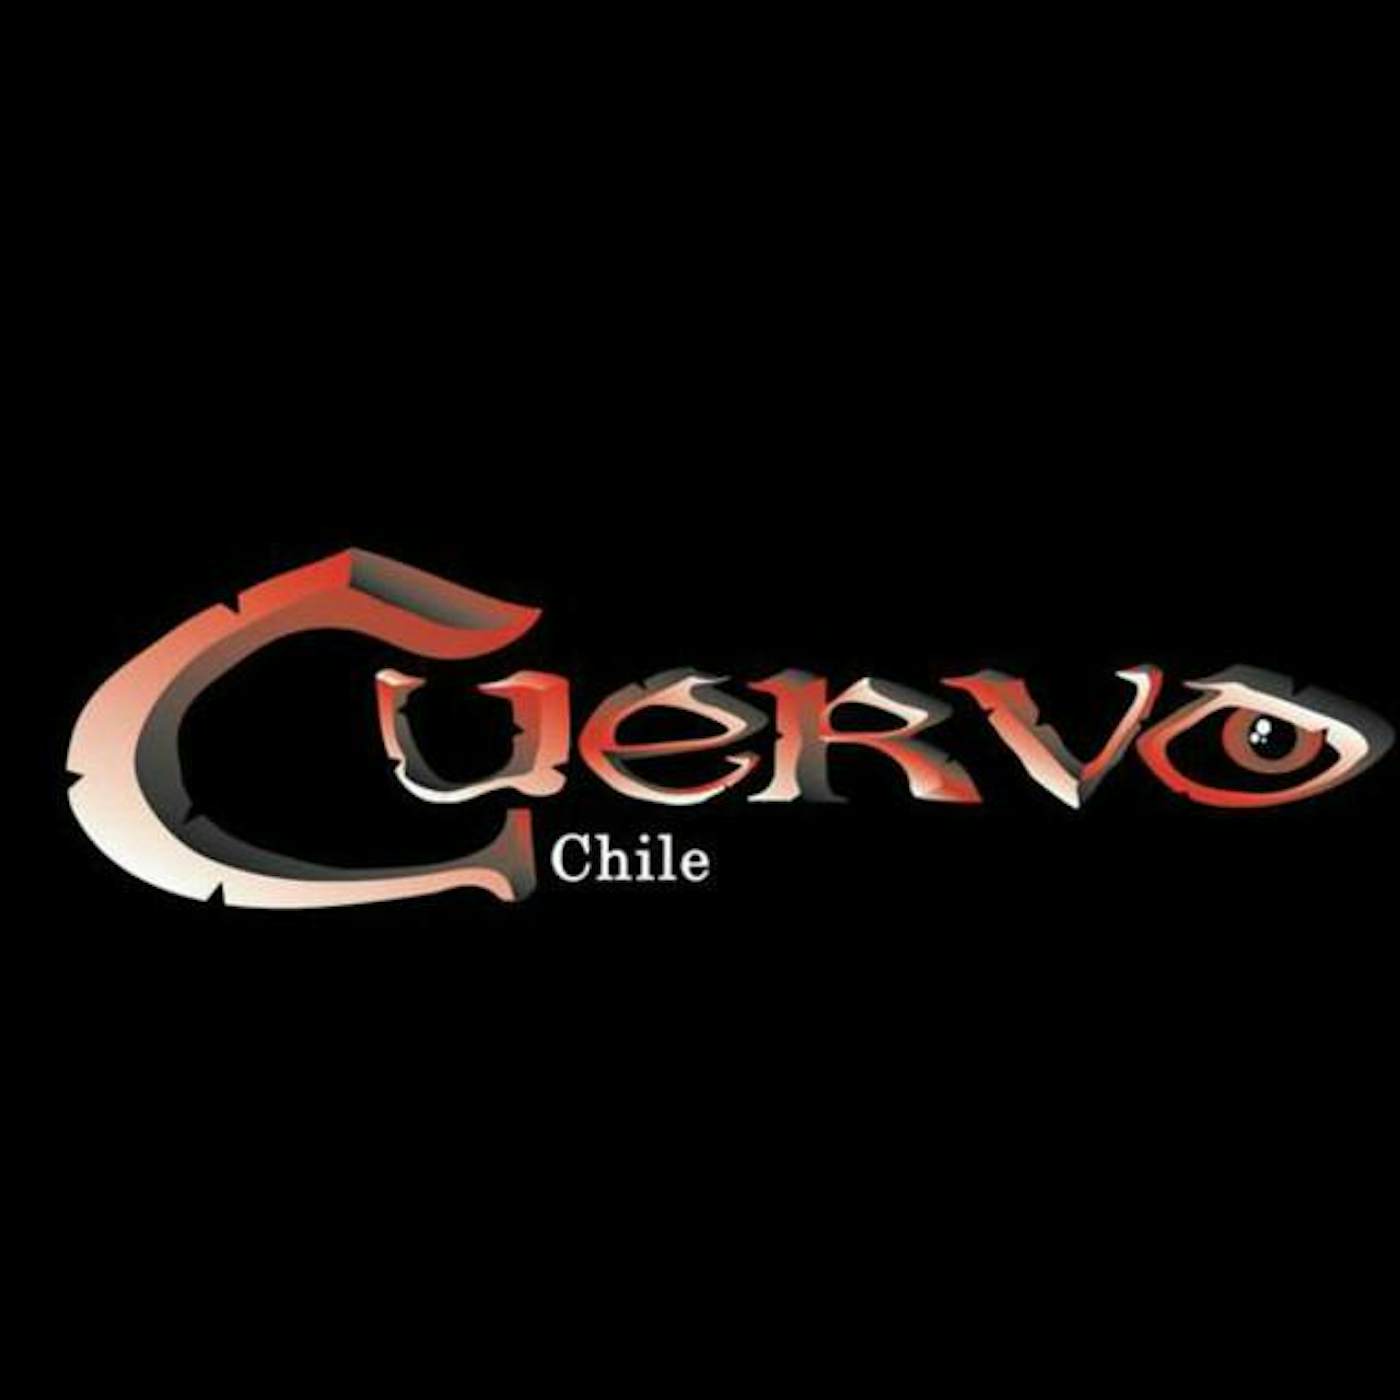 Cuervo Chile